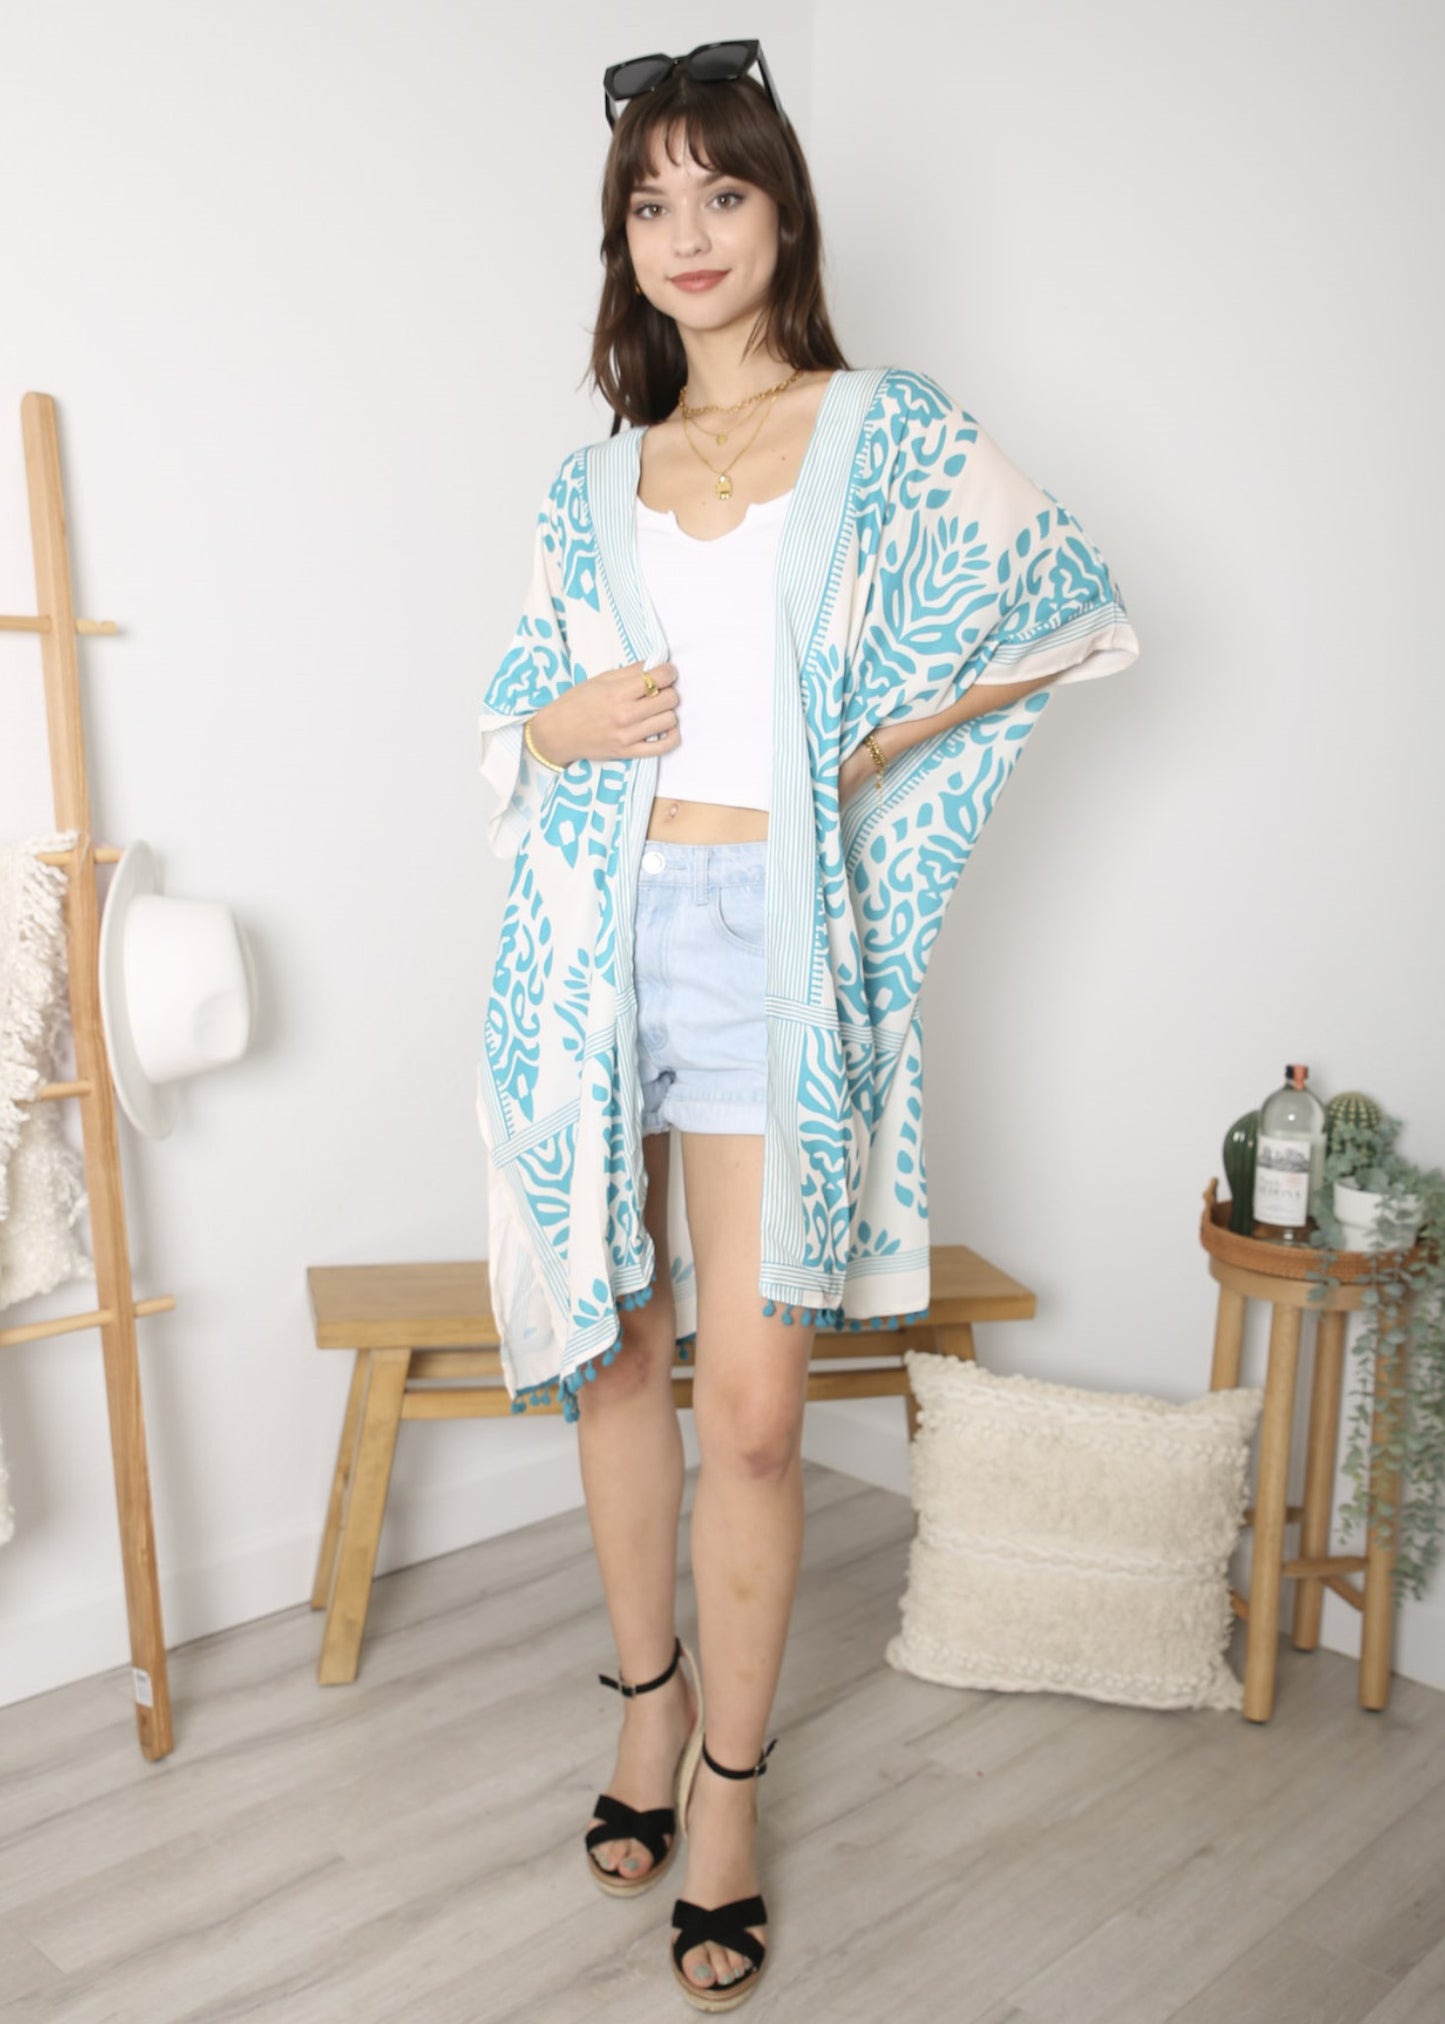 Anna-Kaci Womens Casual Boho Beach Cover Up Print Kimono Cardigan